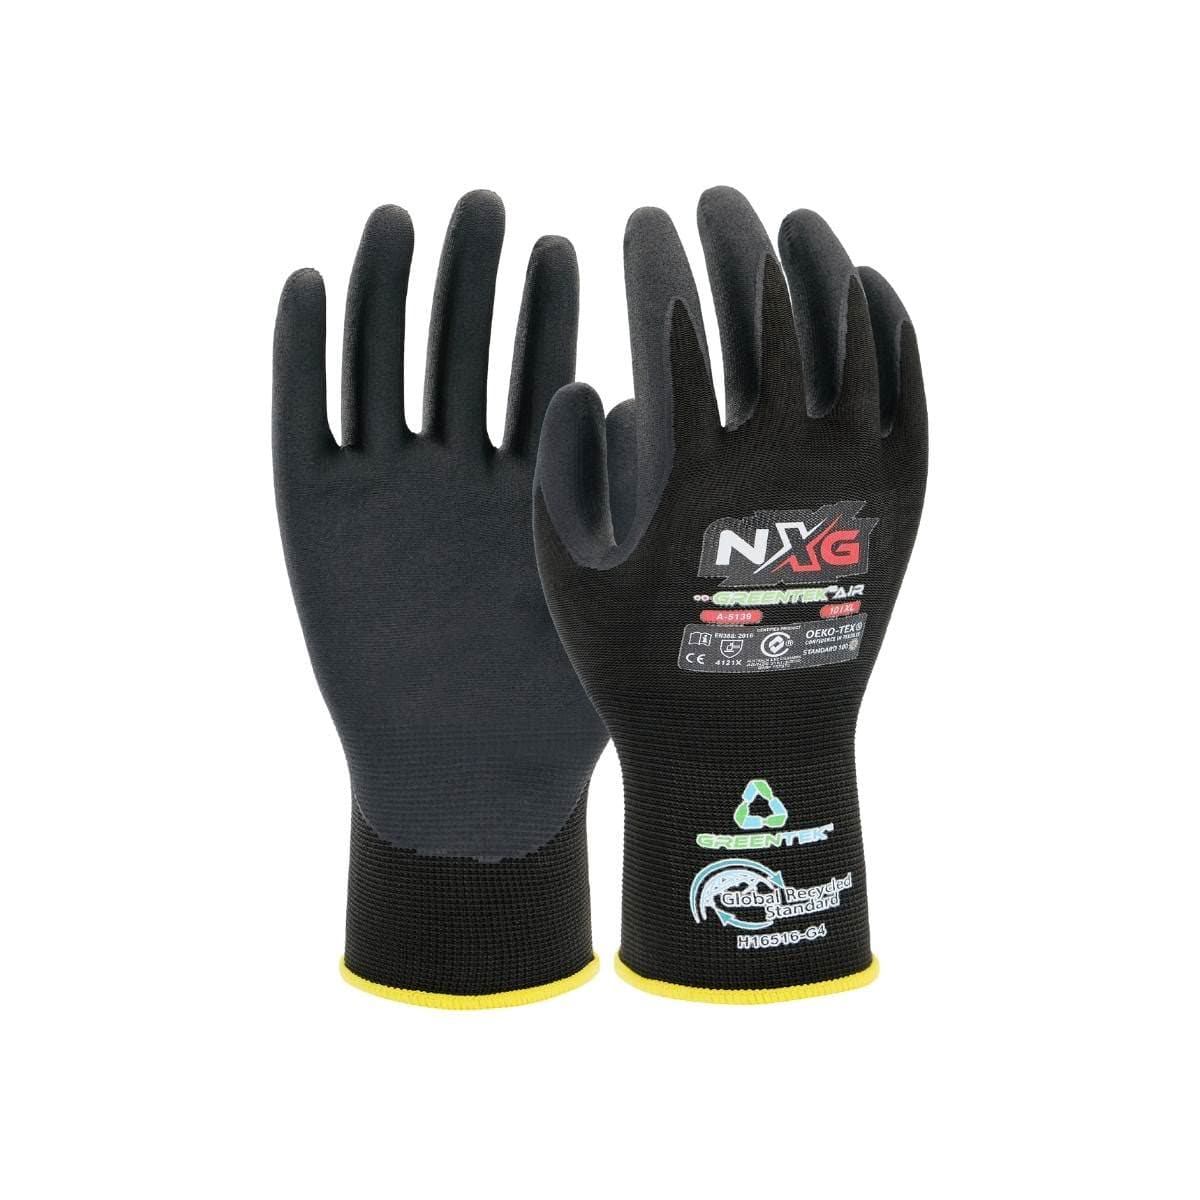 NXG™ GreenTek™ Air Gloves A5139 (Pack of 12)